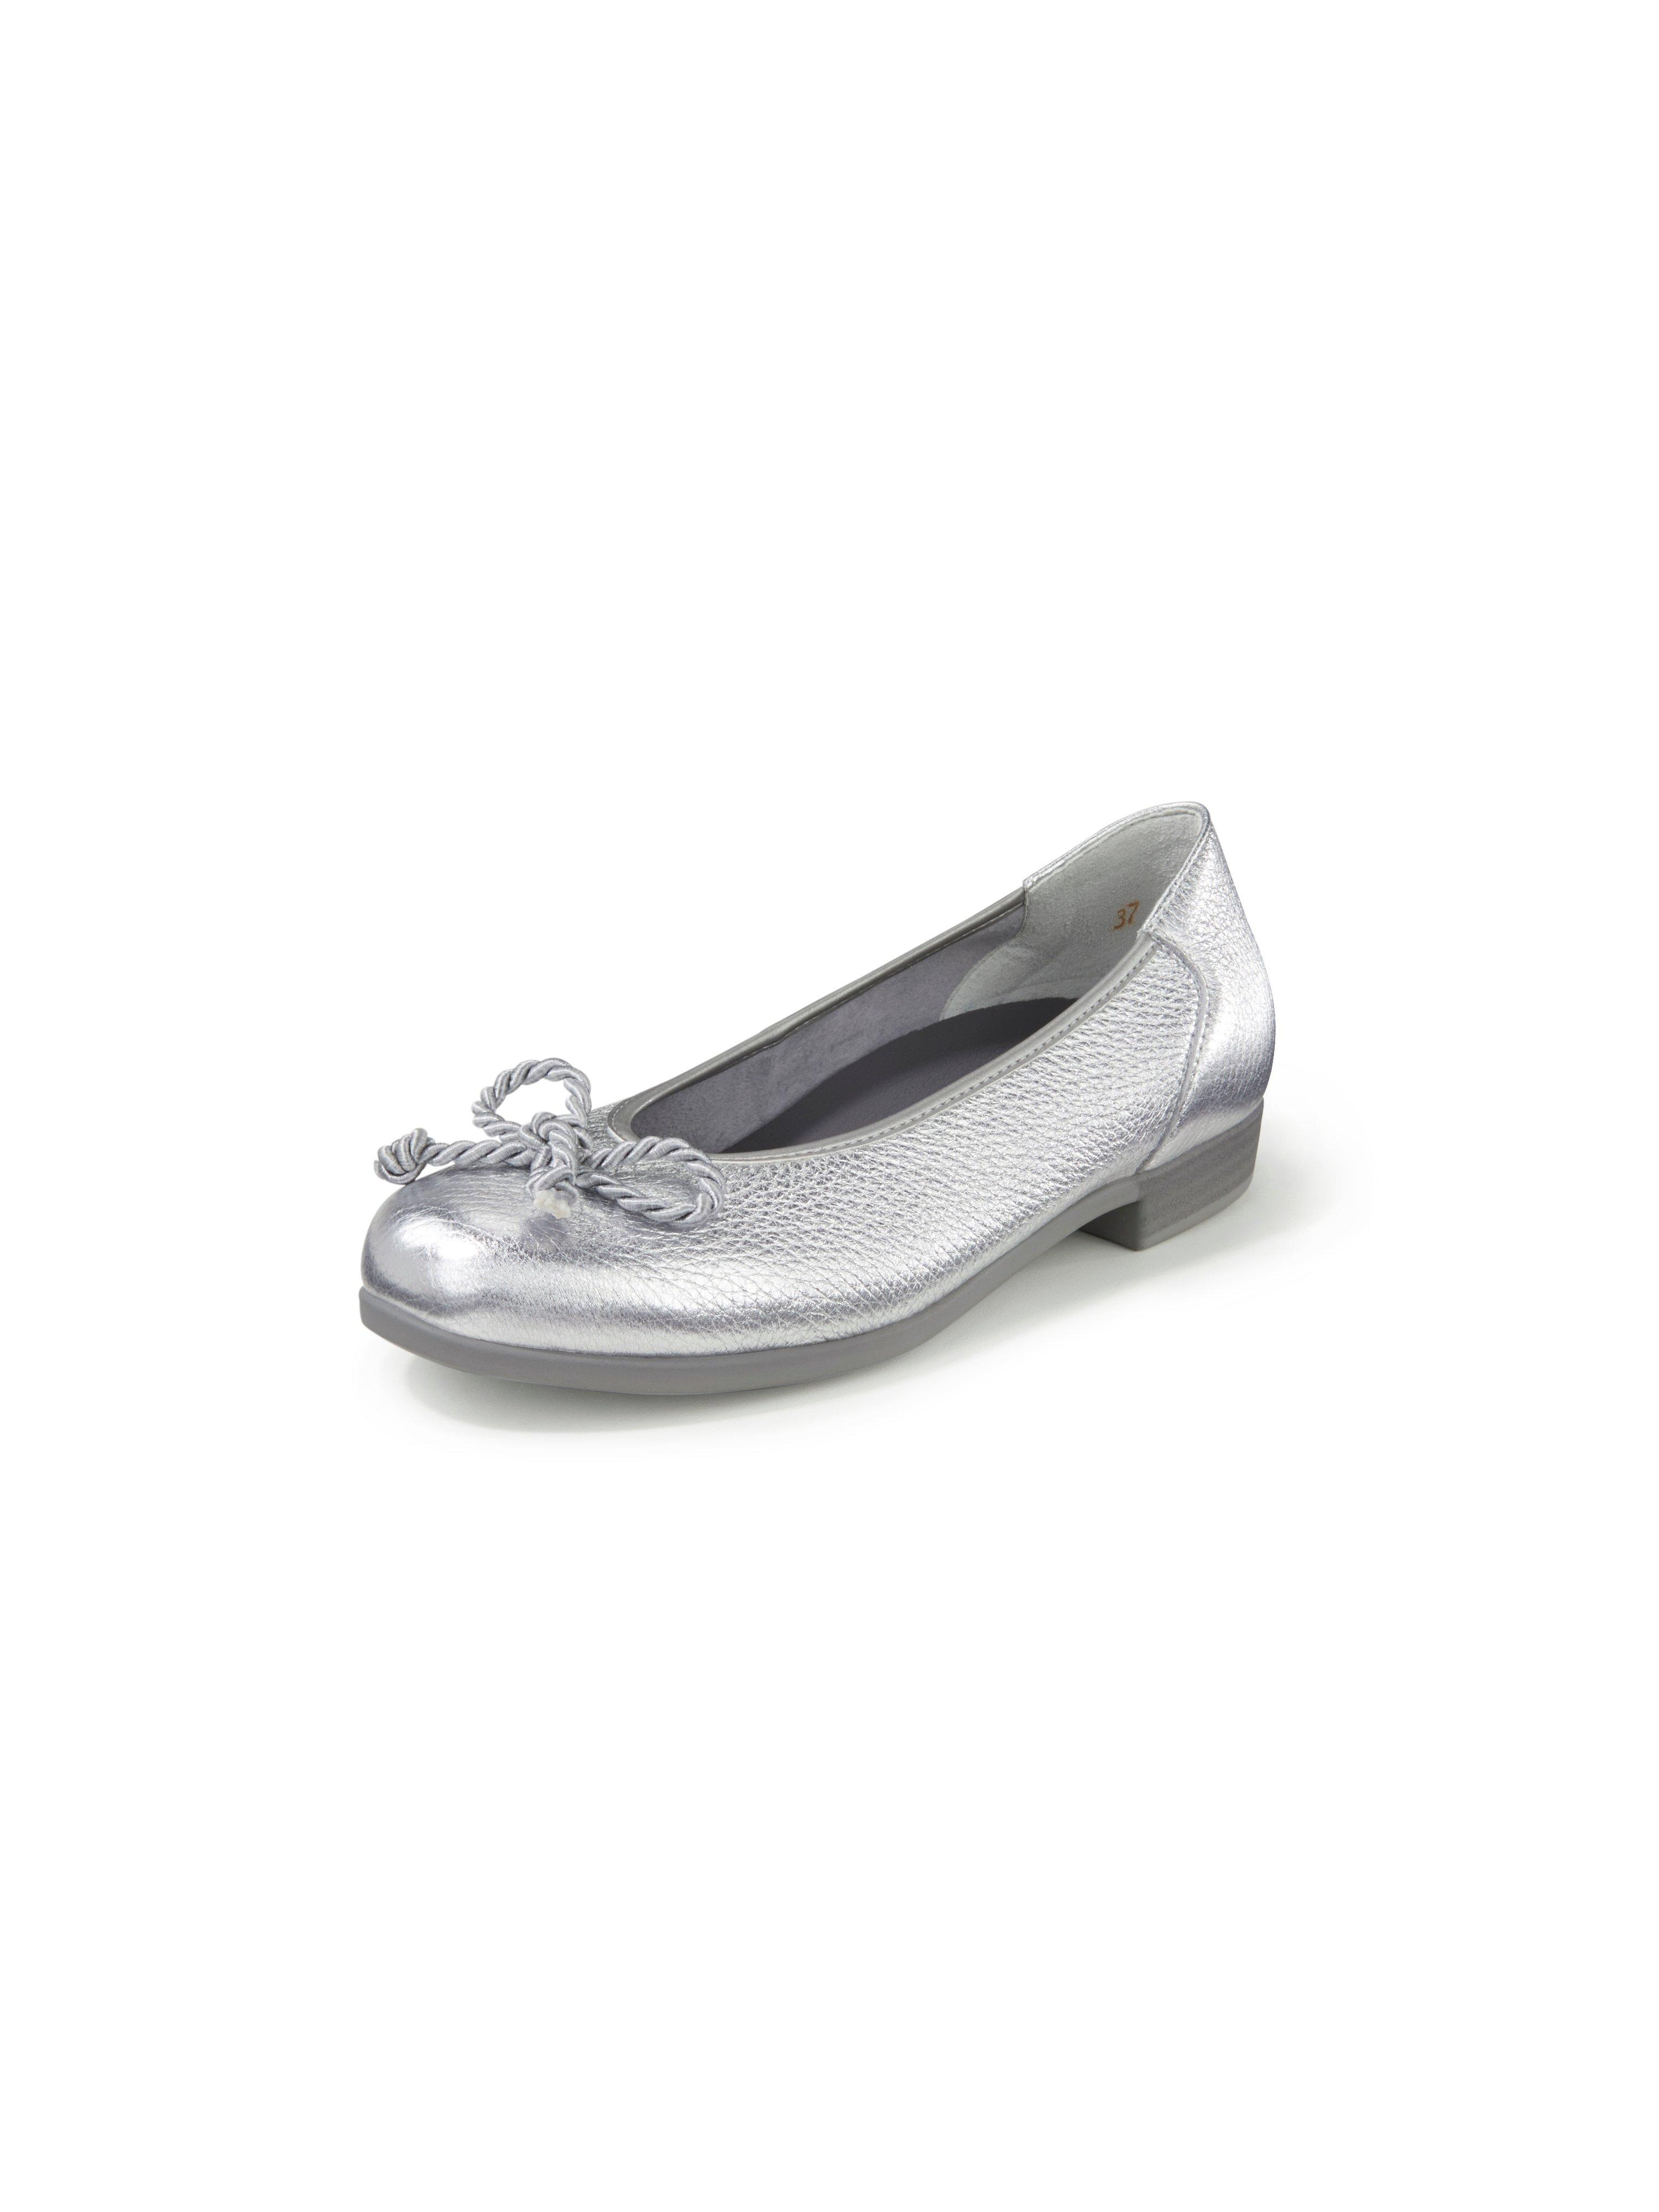 Vitaform - Ballerina pumps - silver metallic